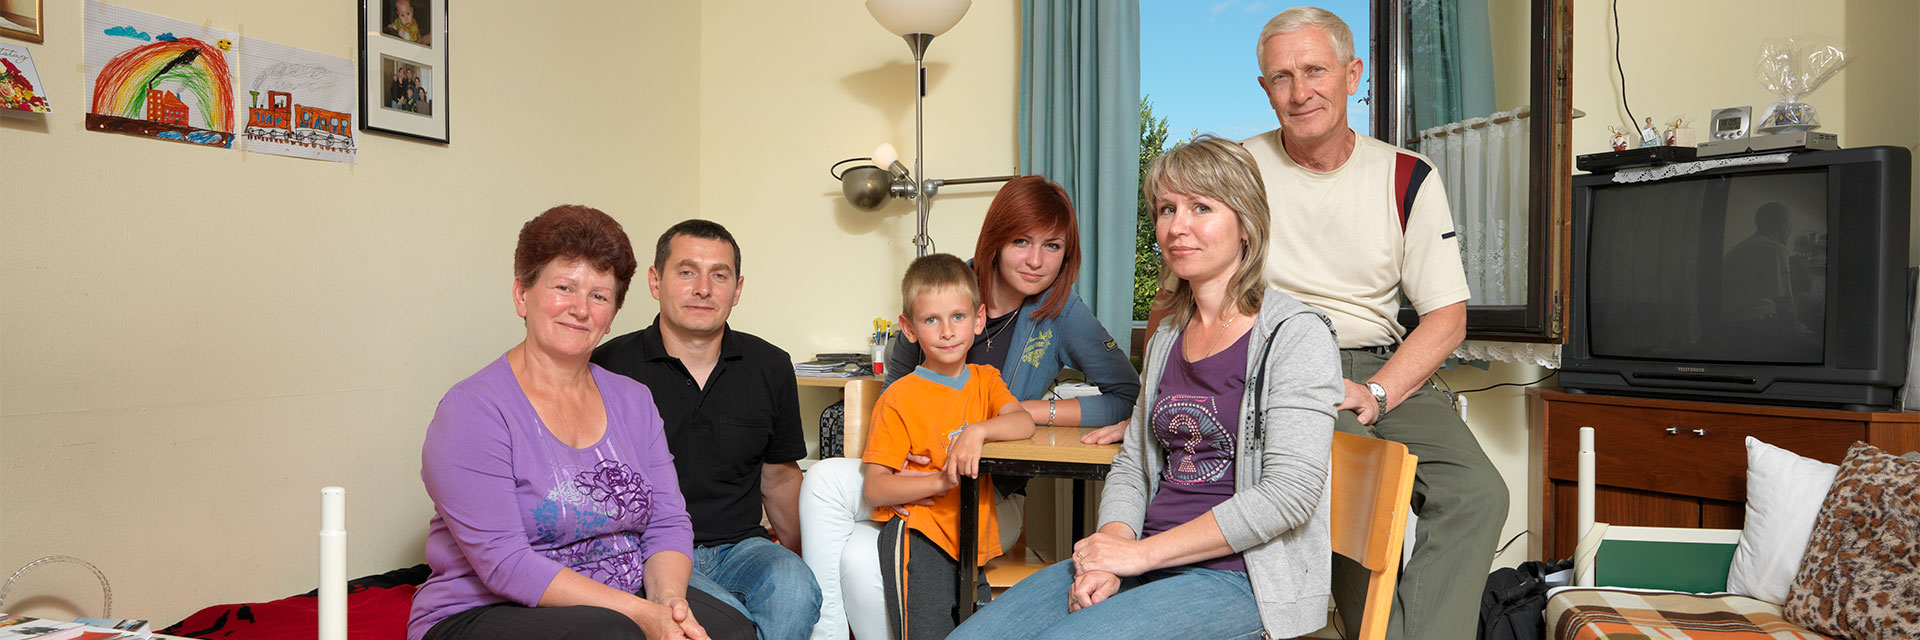 Ethnic German repatriates: Family in her room